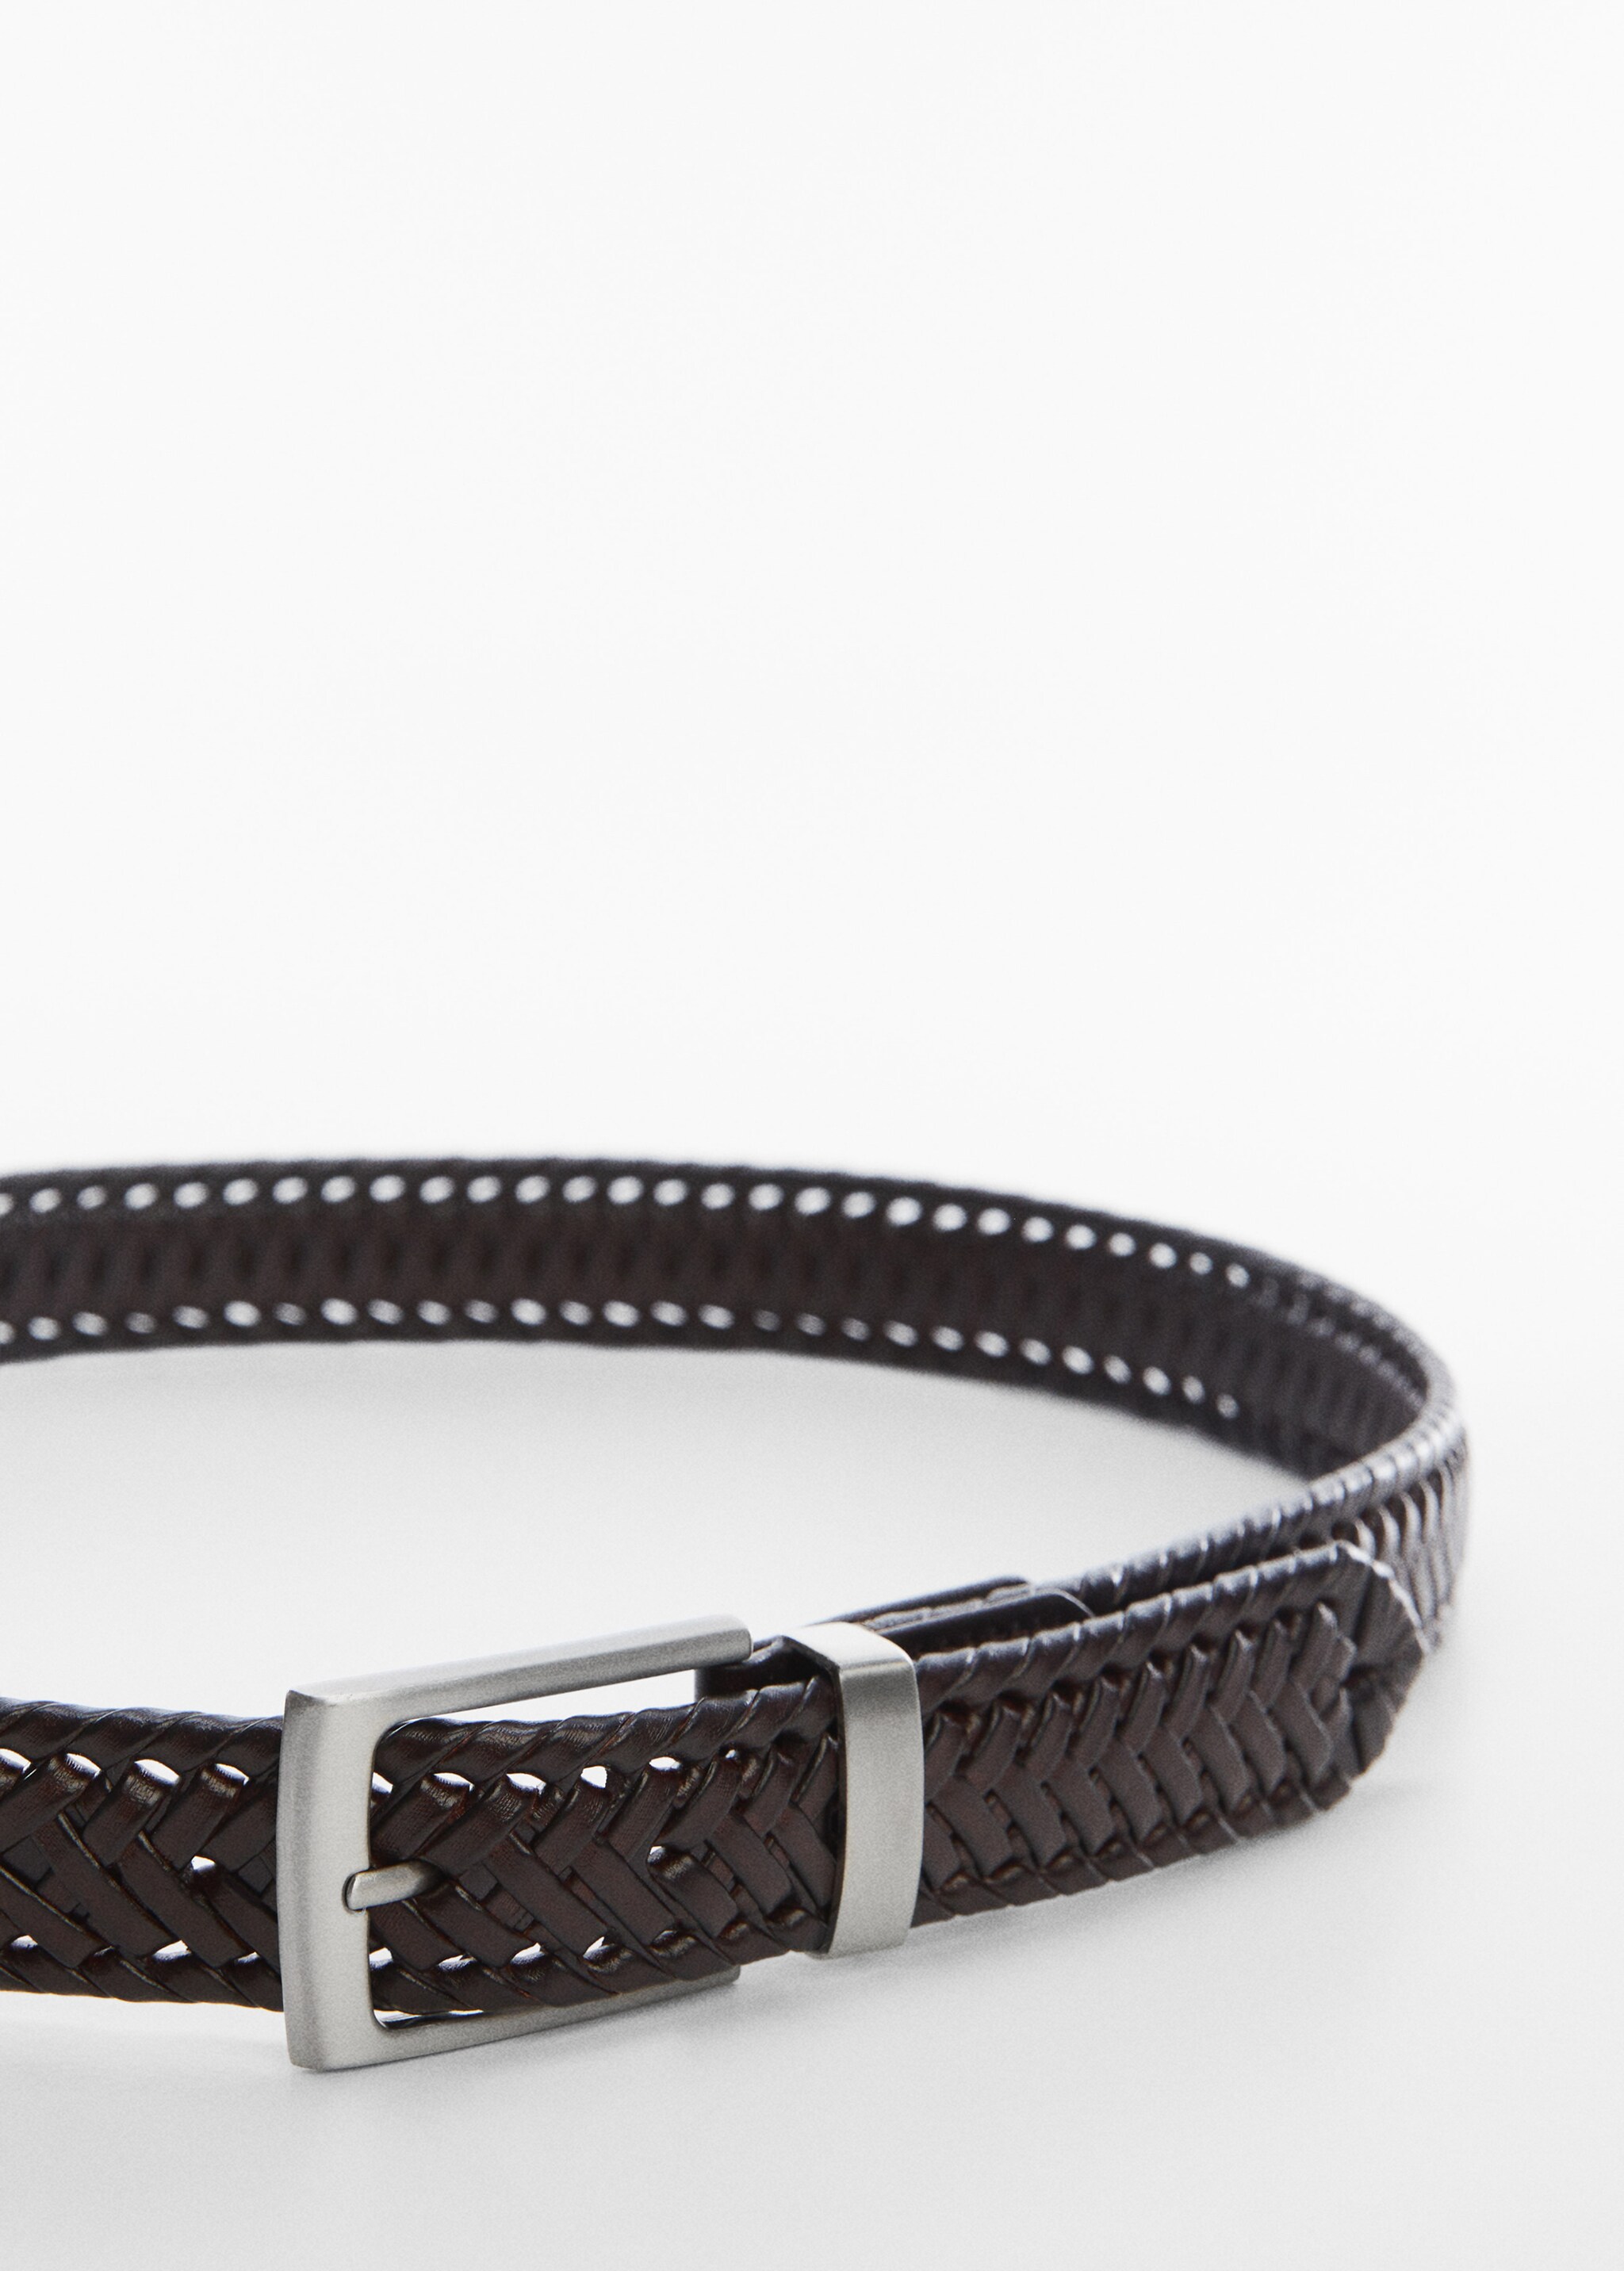 Braided leather belt - Medium plane